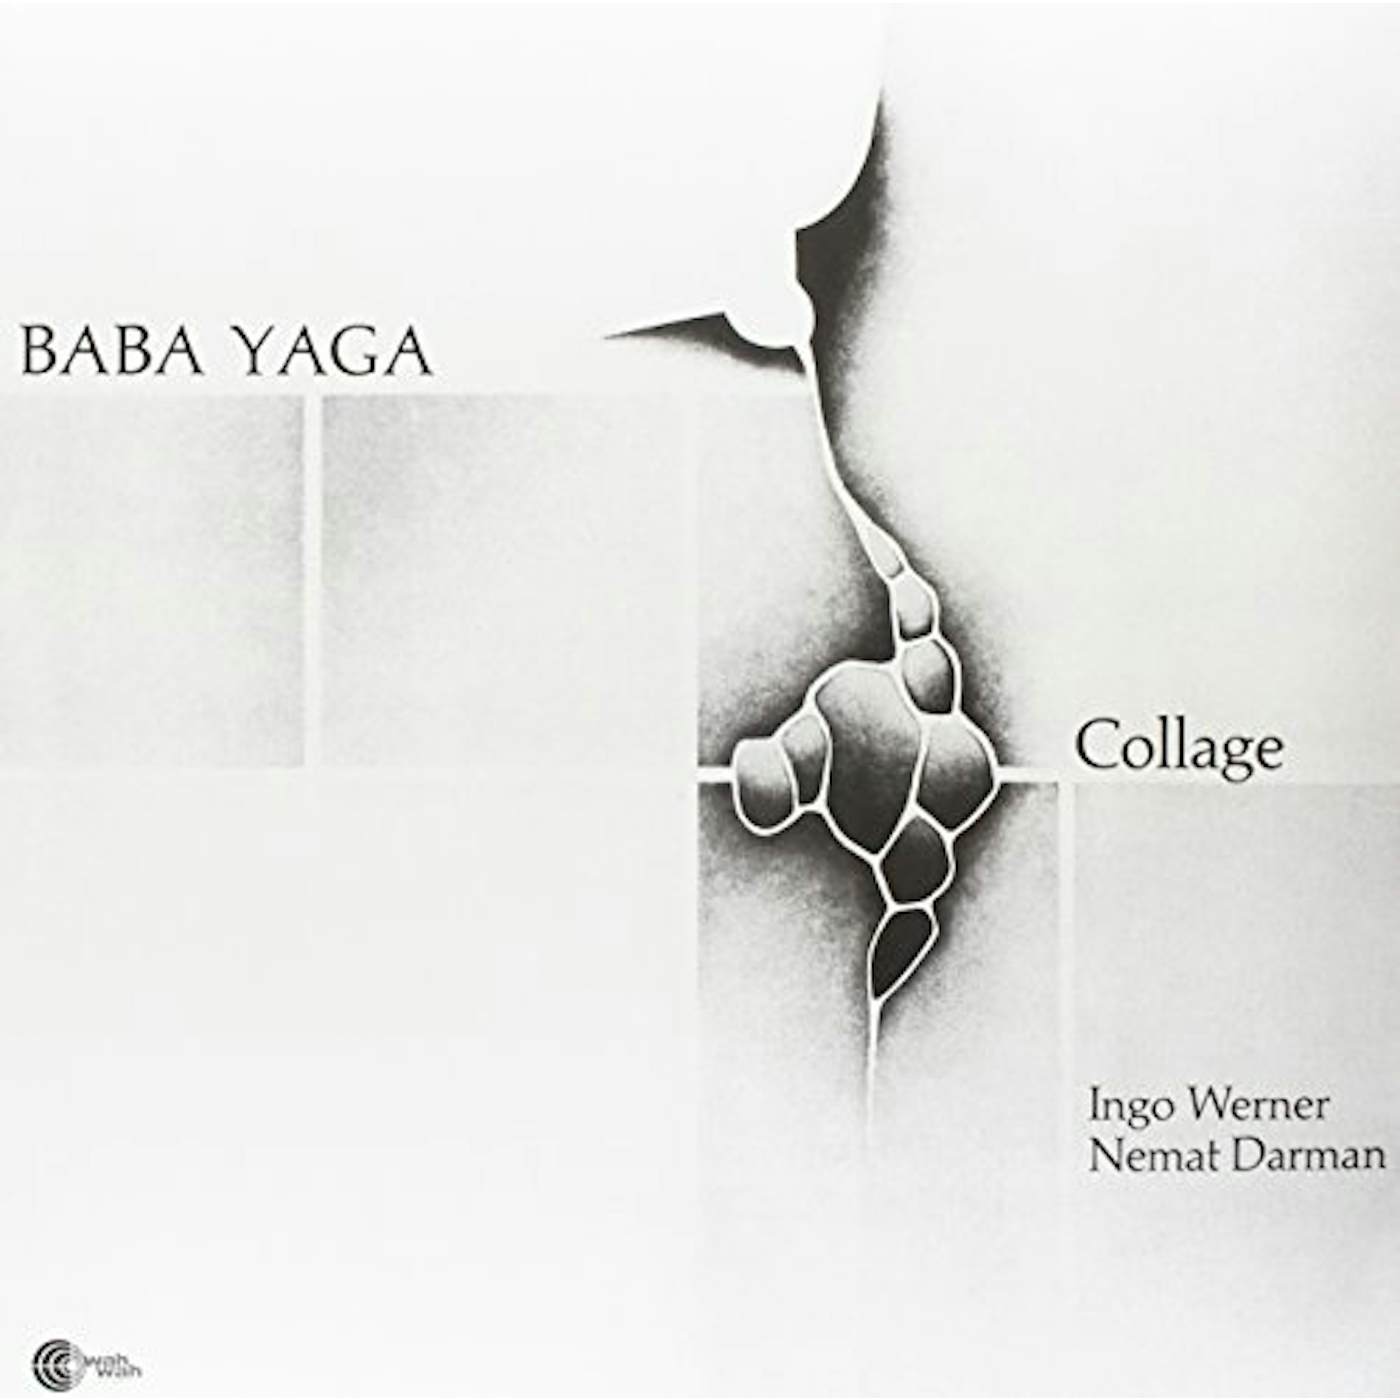 Baba Yaga Collage Vinyl Record